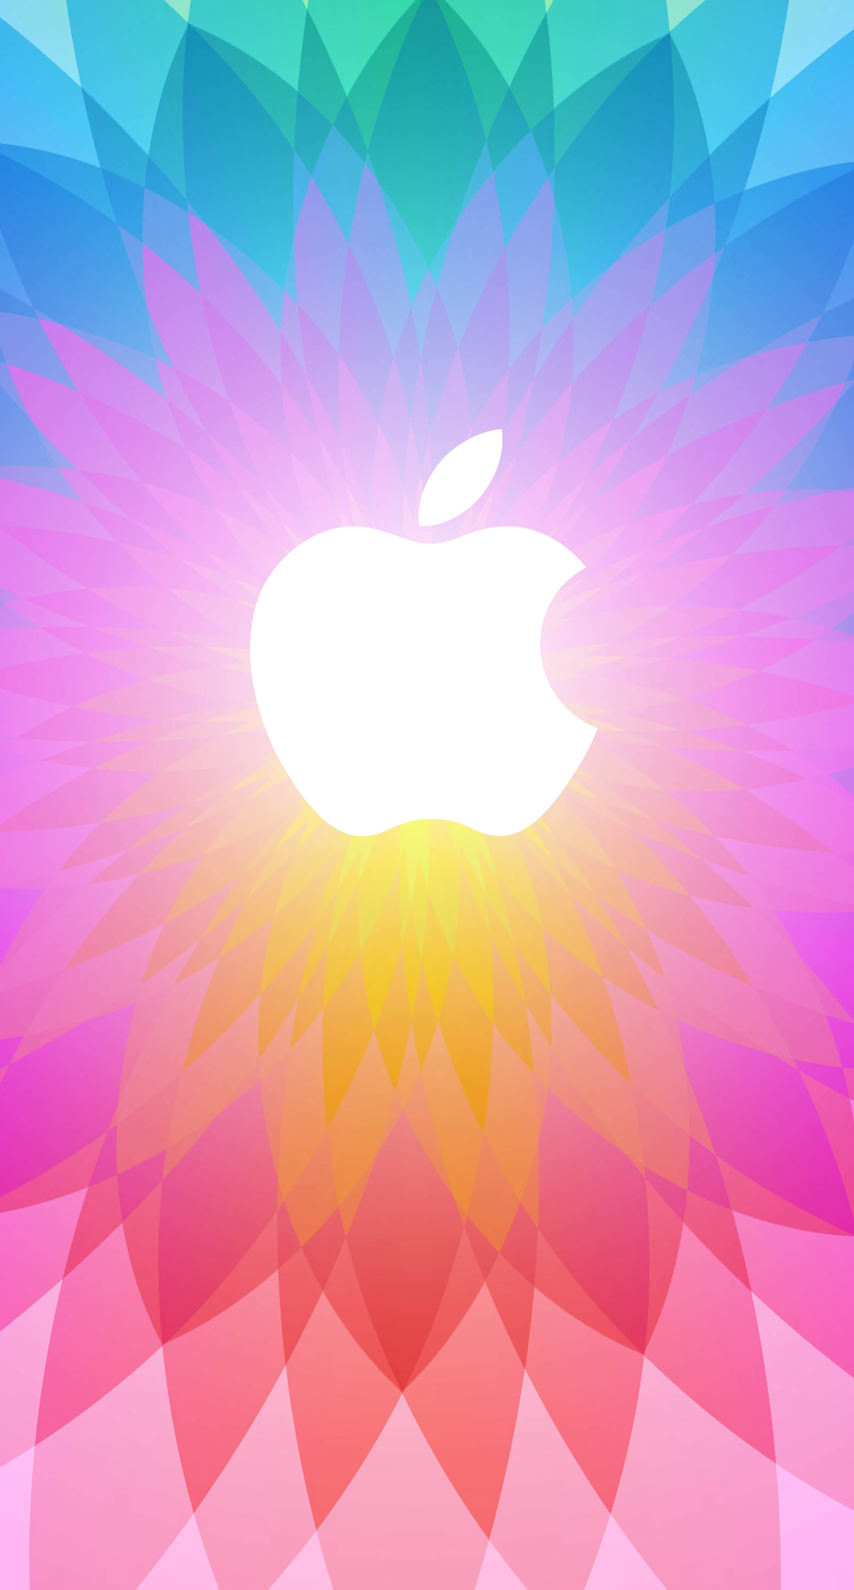 Apple logo colorful pattern | wallpaper.sc iPhone6s